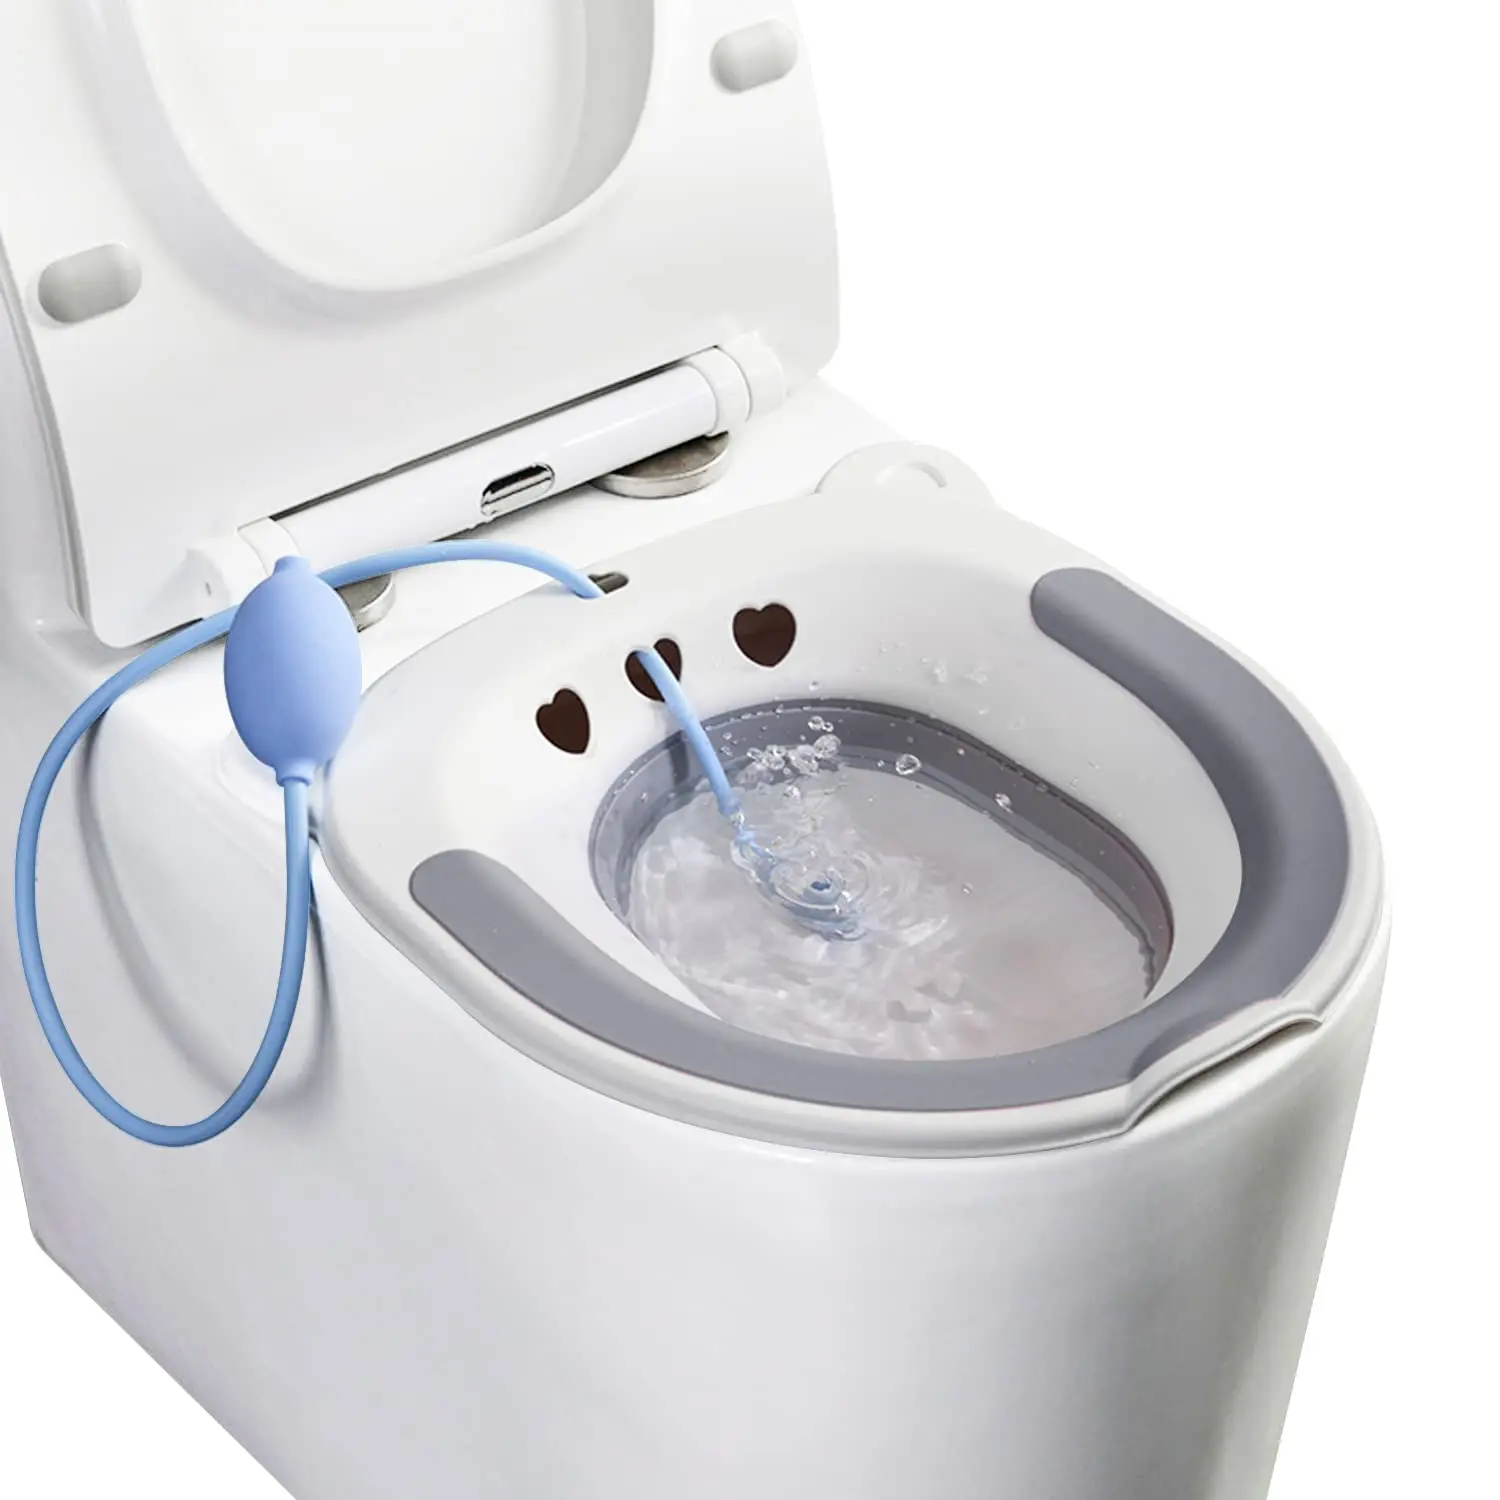 Yoni steam Upgrade Folding Sitz Baths for Toilet Seat with Flusher  for Hemorrhoids & Perineum, Pregnant Women & Postpartum Care